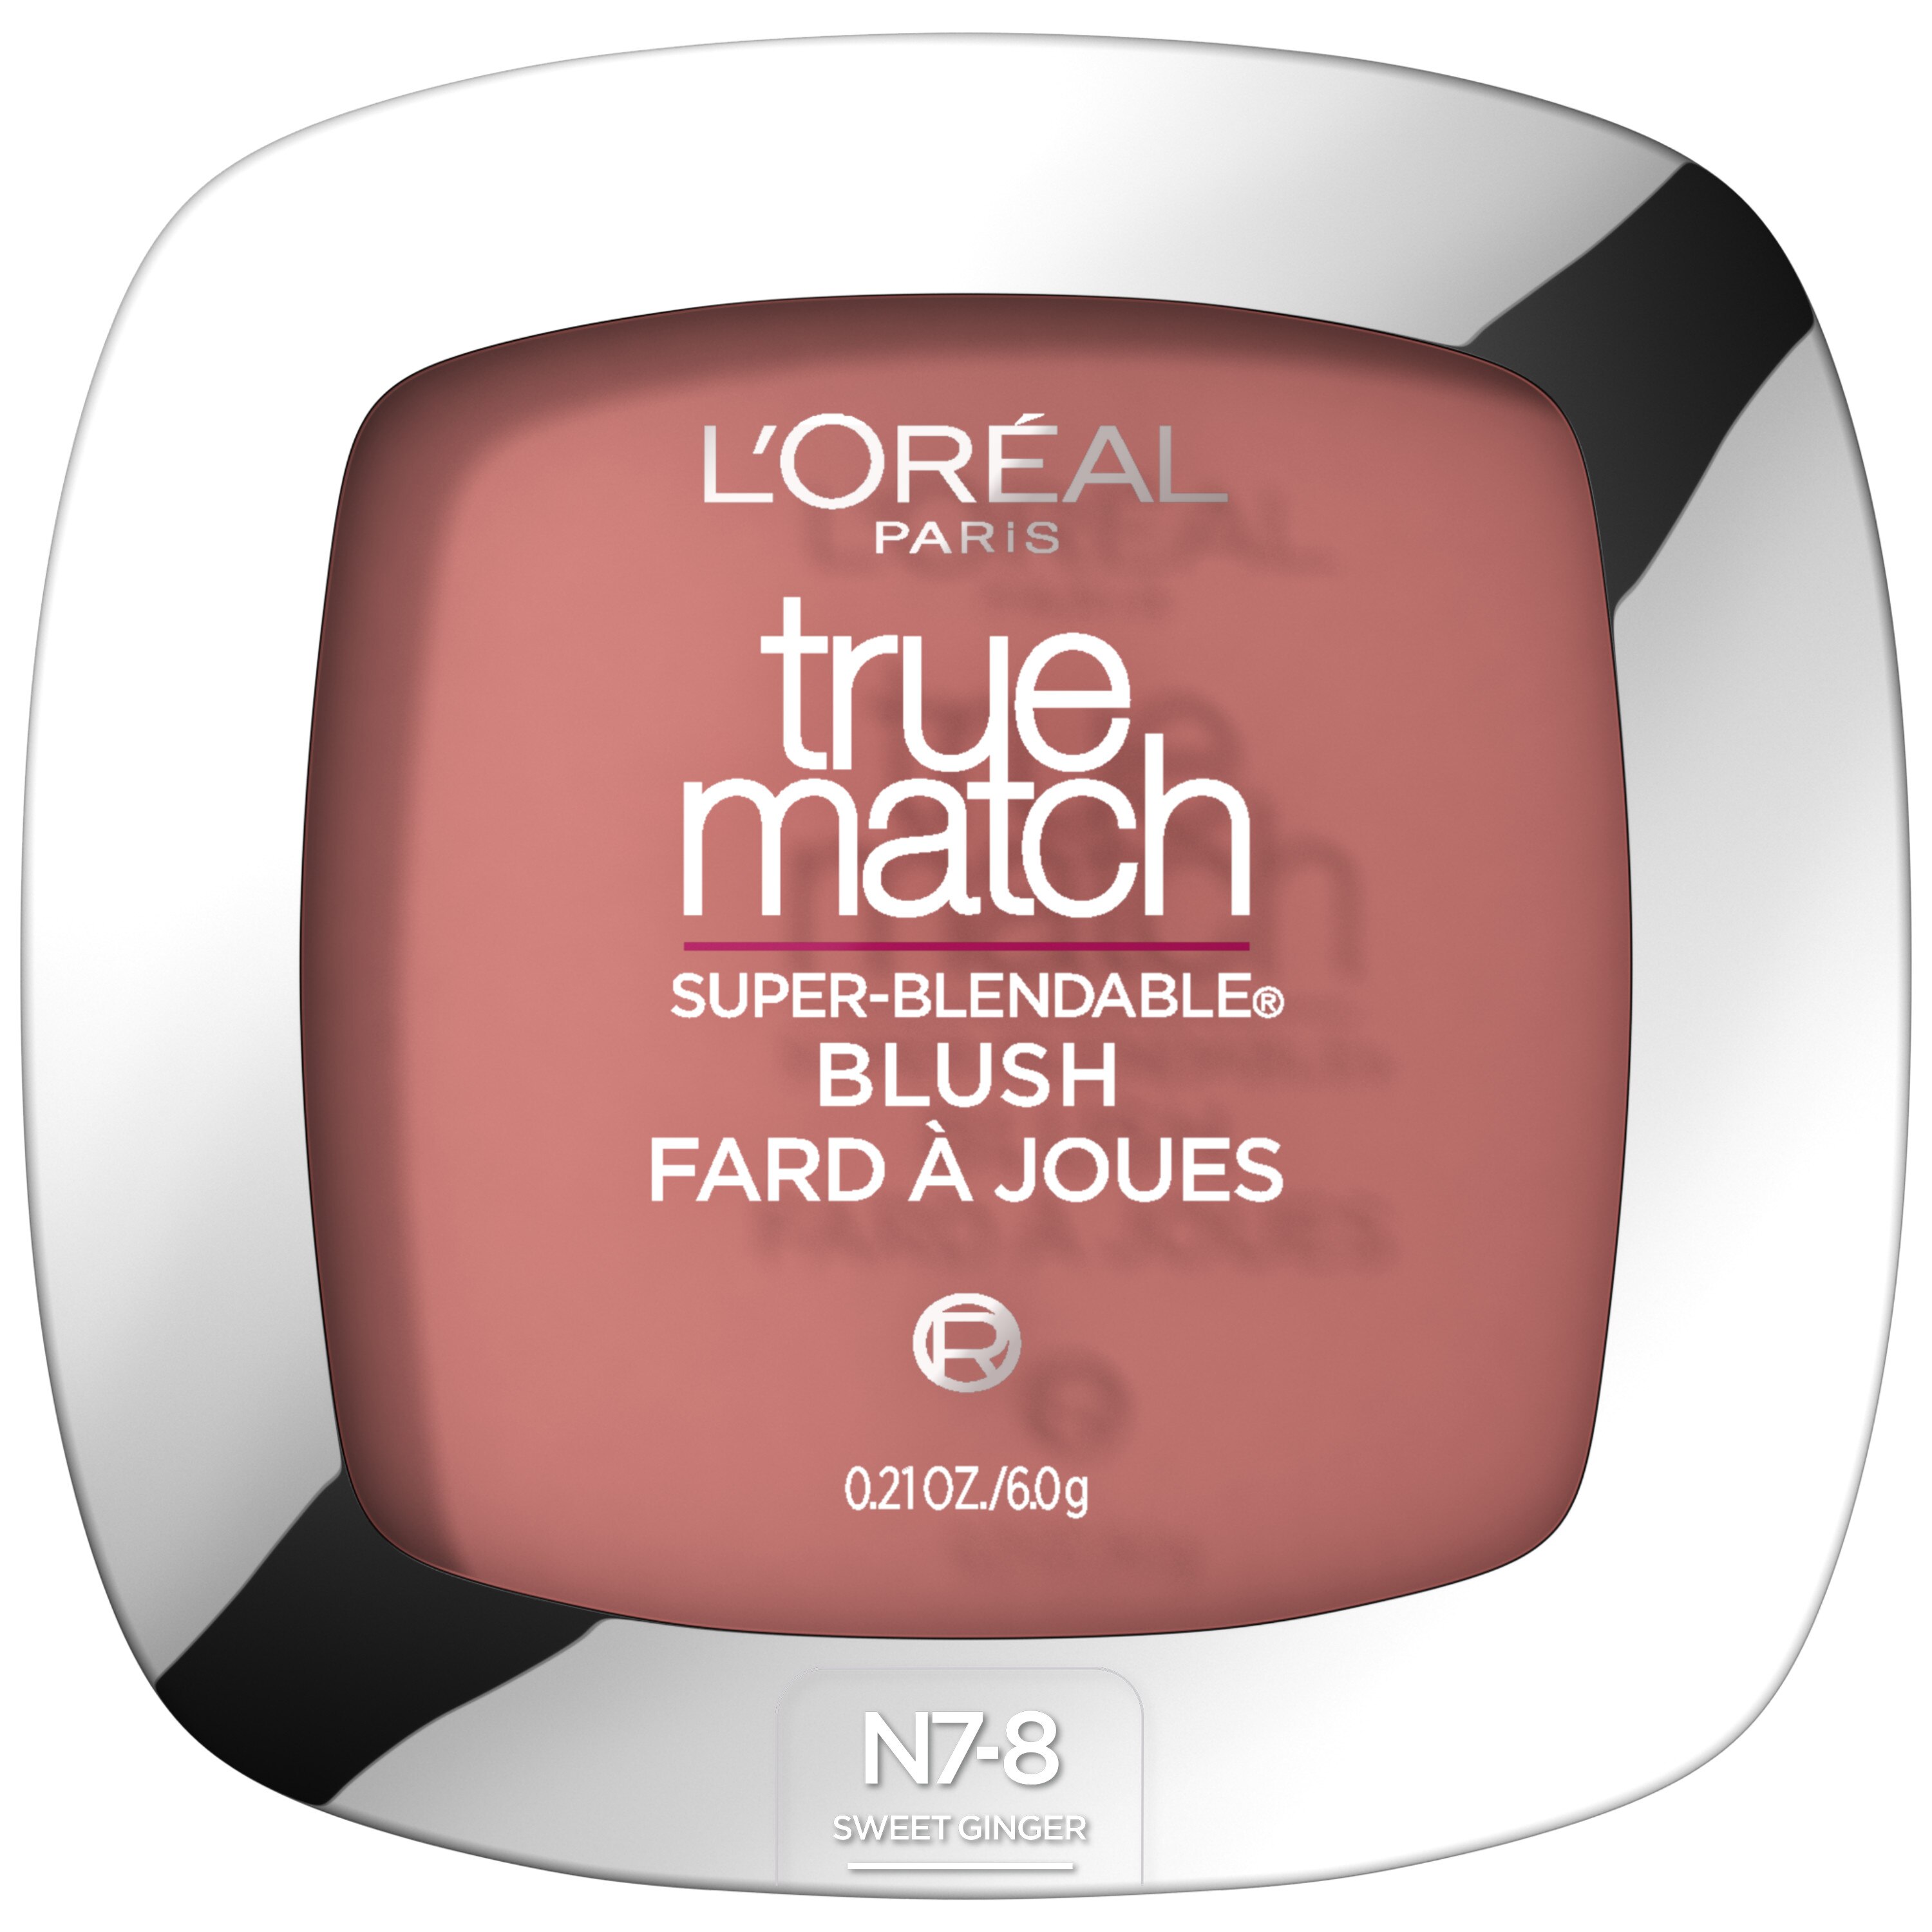 L'Oreal Paris True Match Super-Blendable Blush, N7-8 Sweet Ginger , CVS